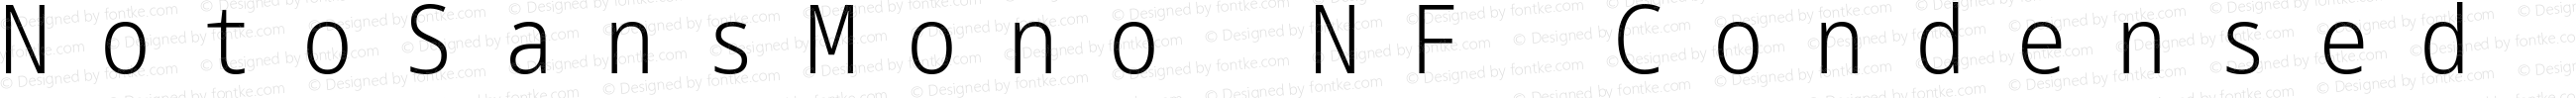 Noto Sans Mono Condensed Light Nerd Font Complete Mono Windows Compatible